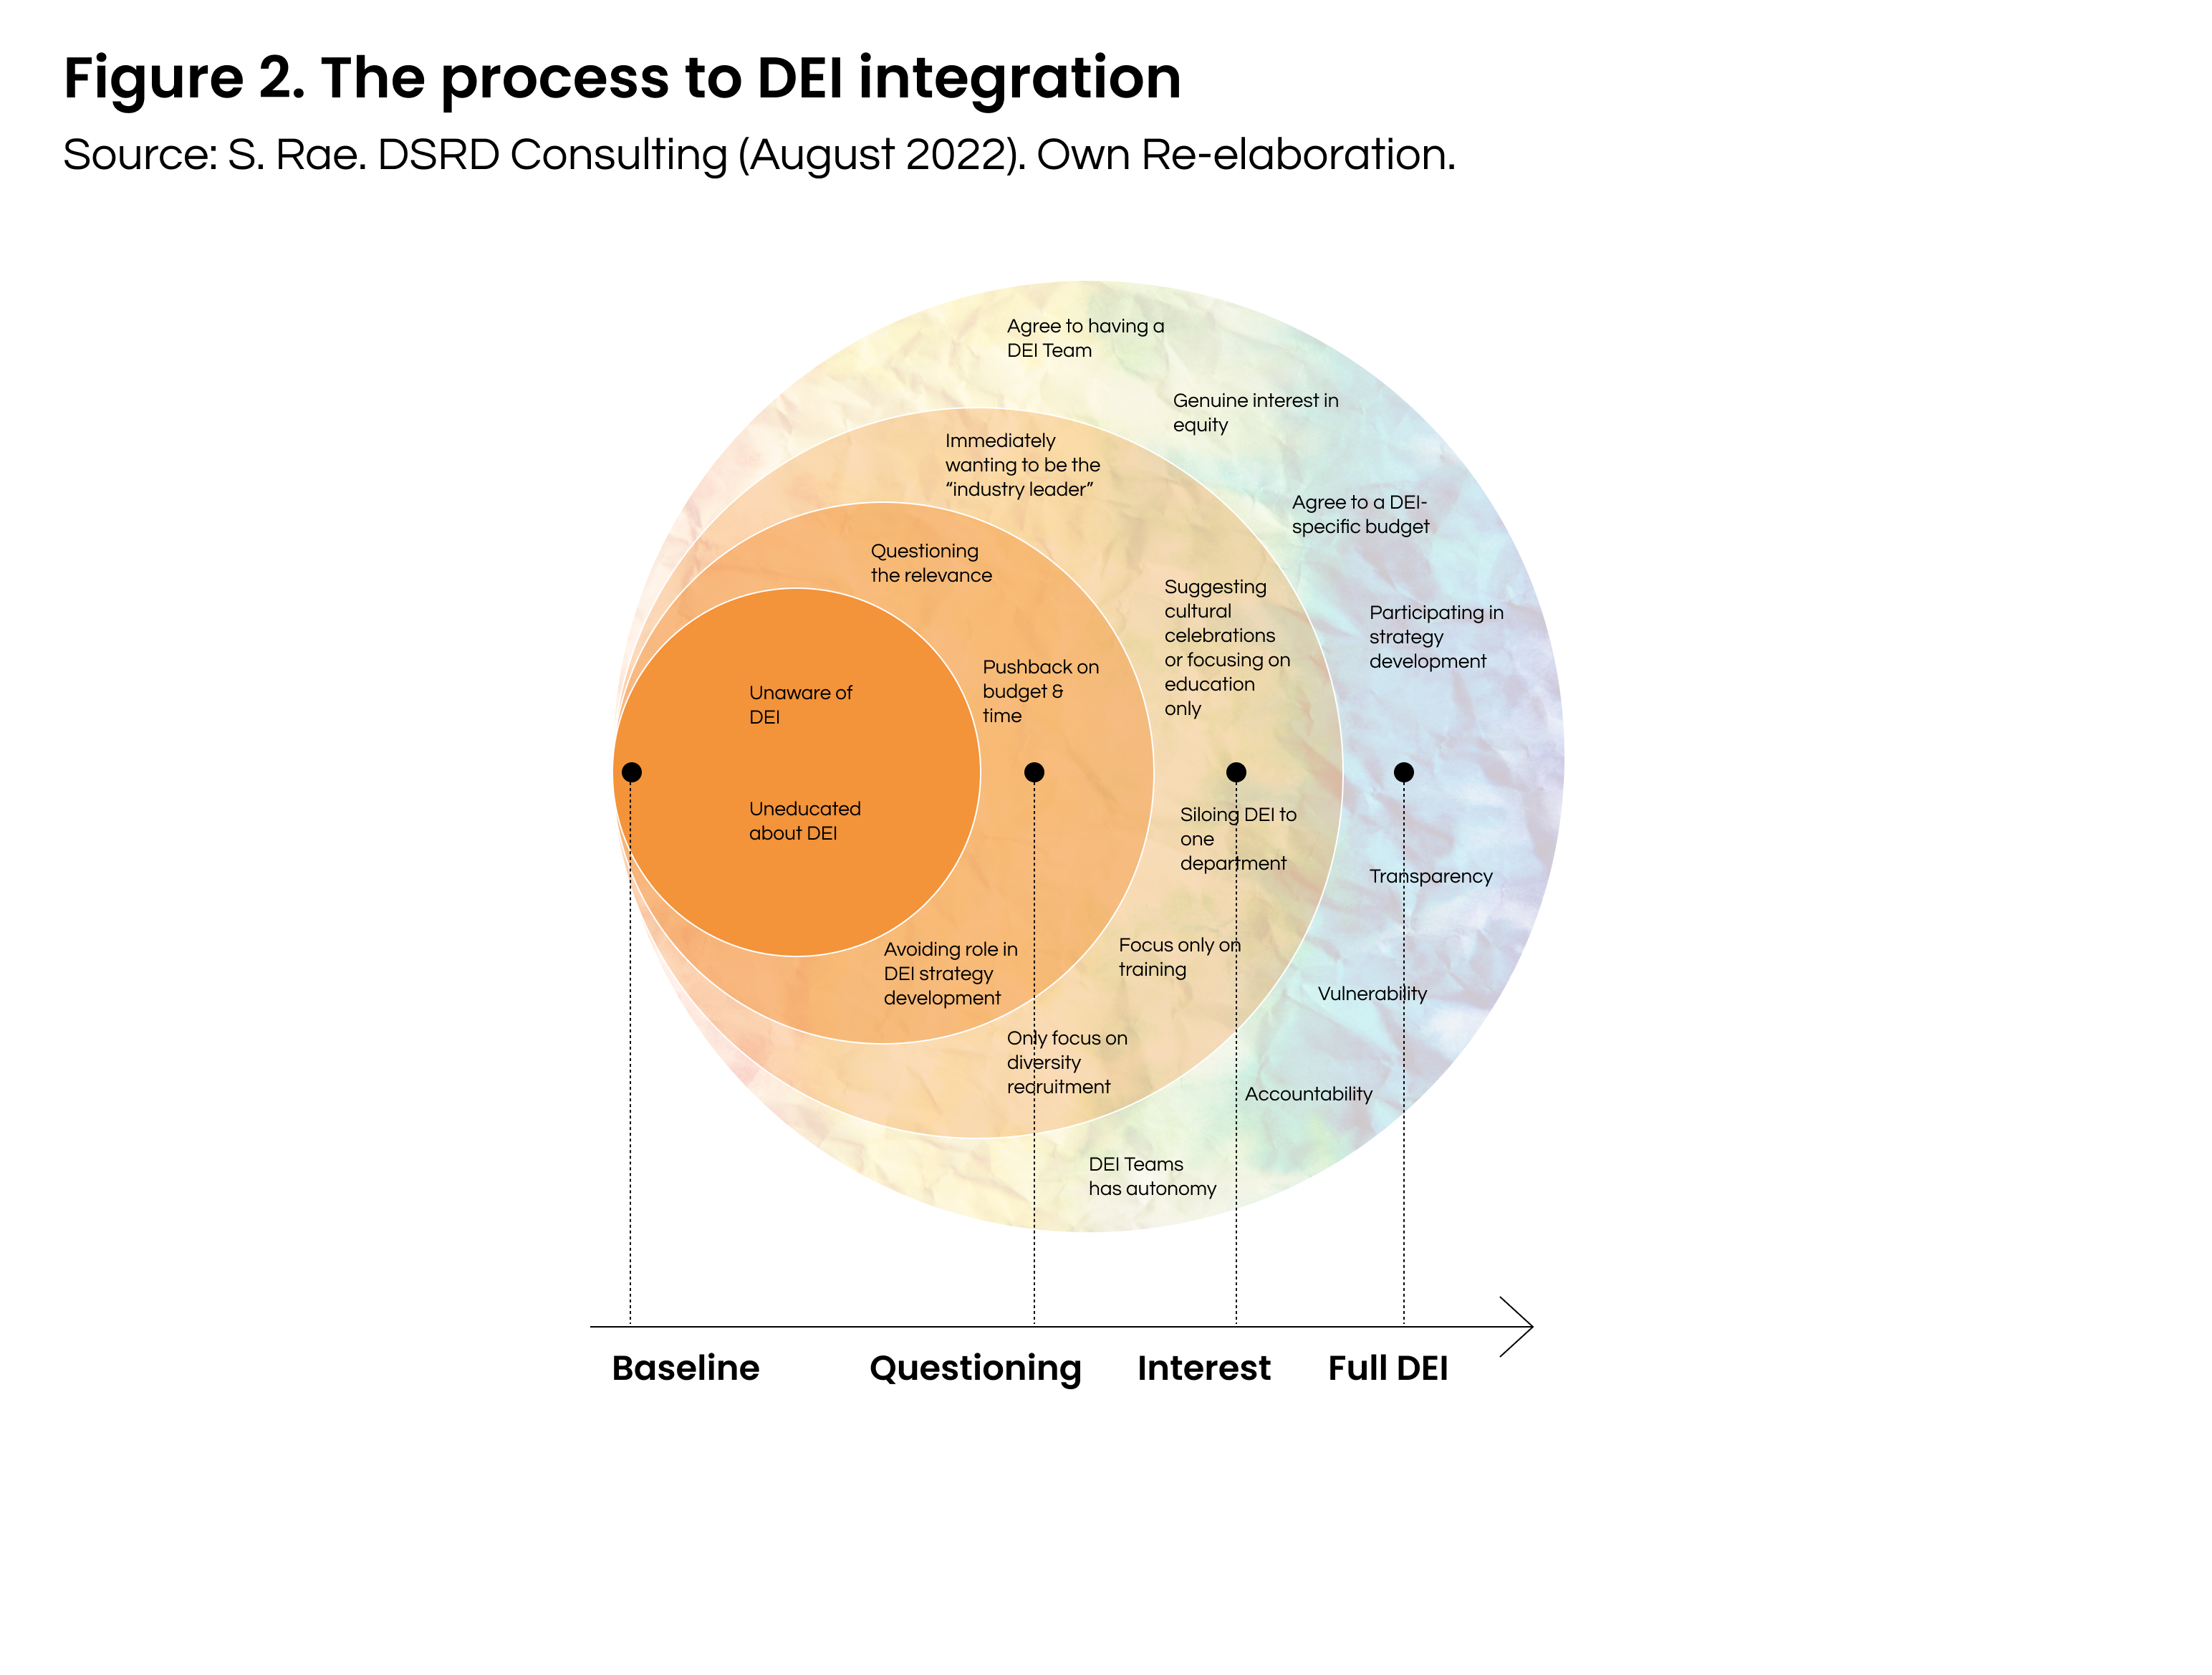 Process of DEI integration